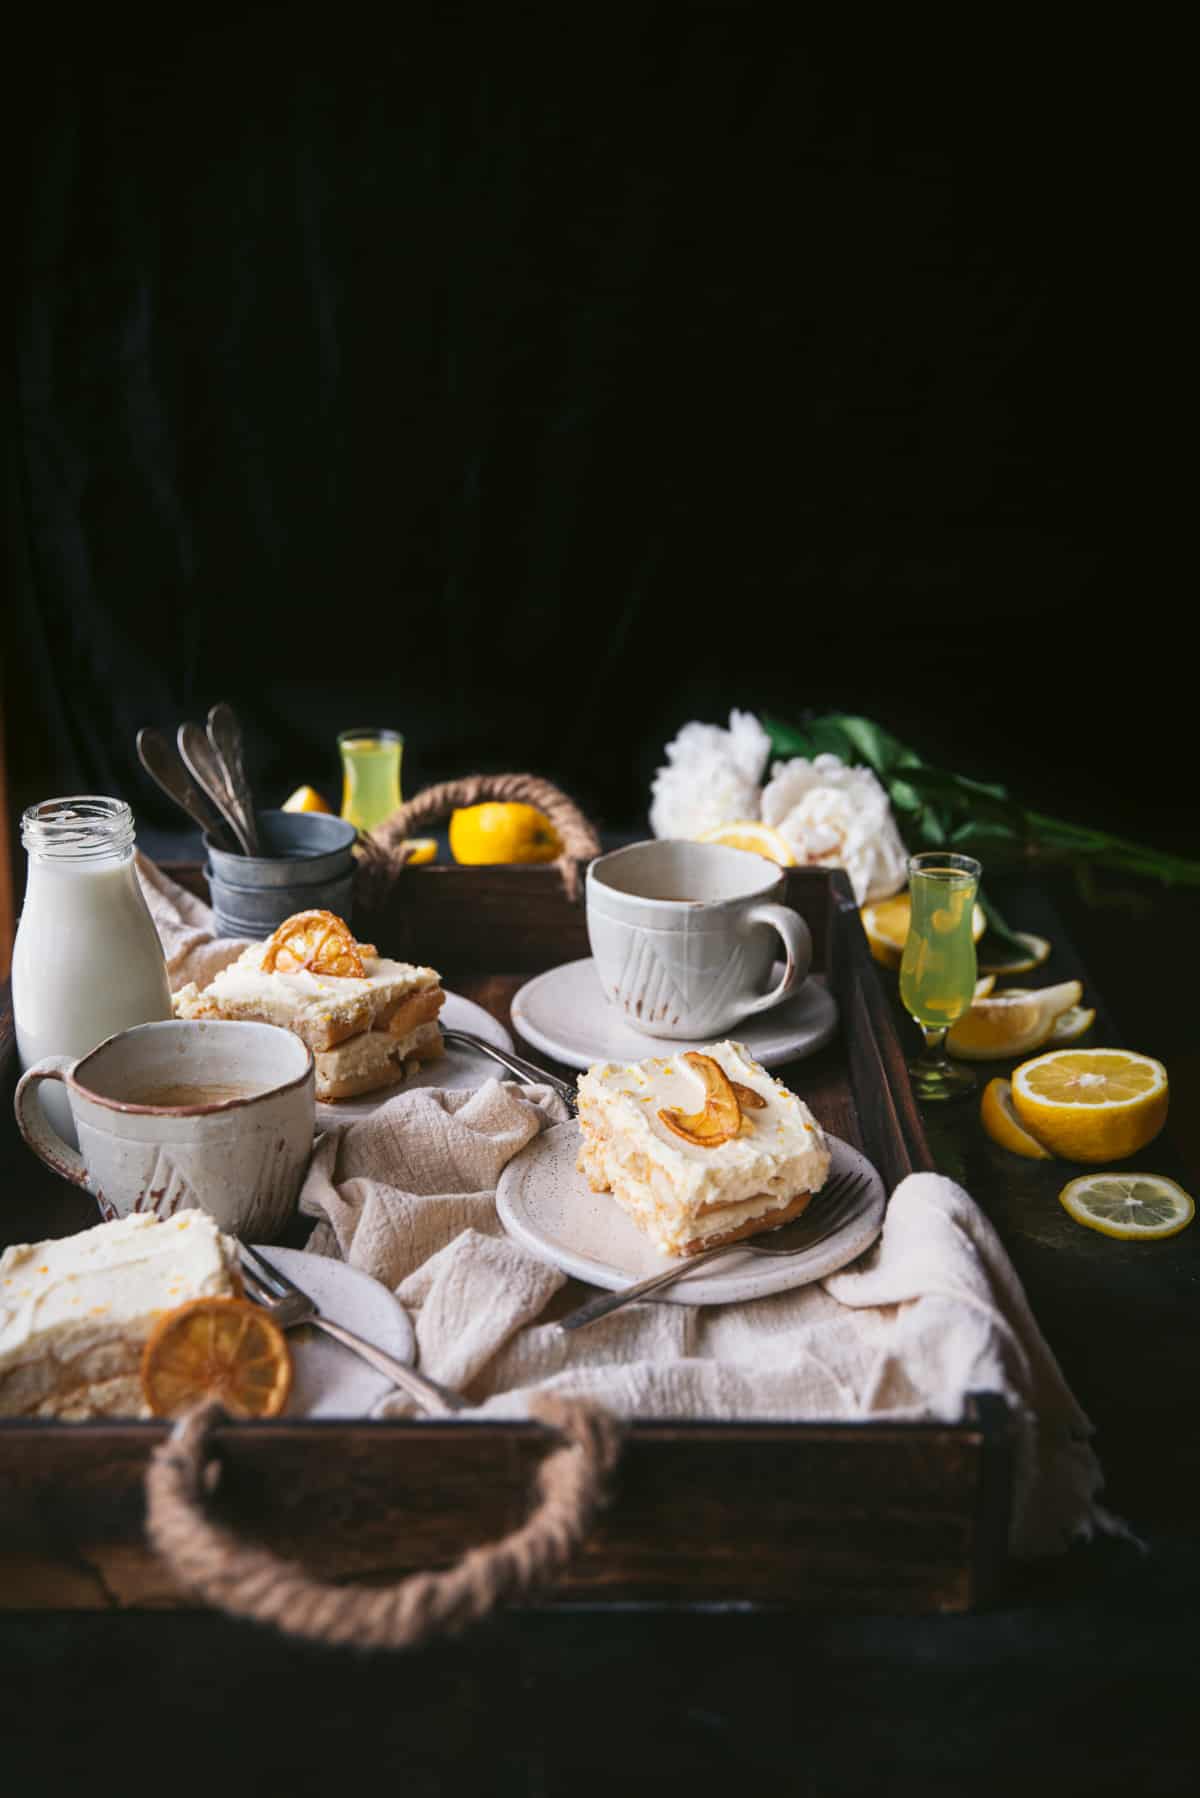 slices of limoncello tiramisu on a serving tray with coffee